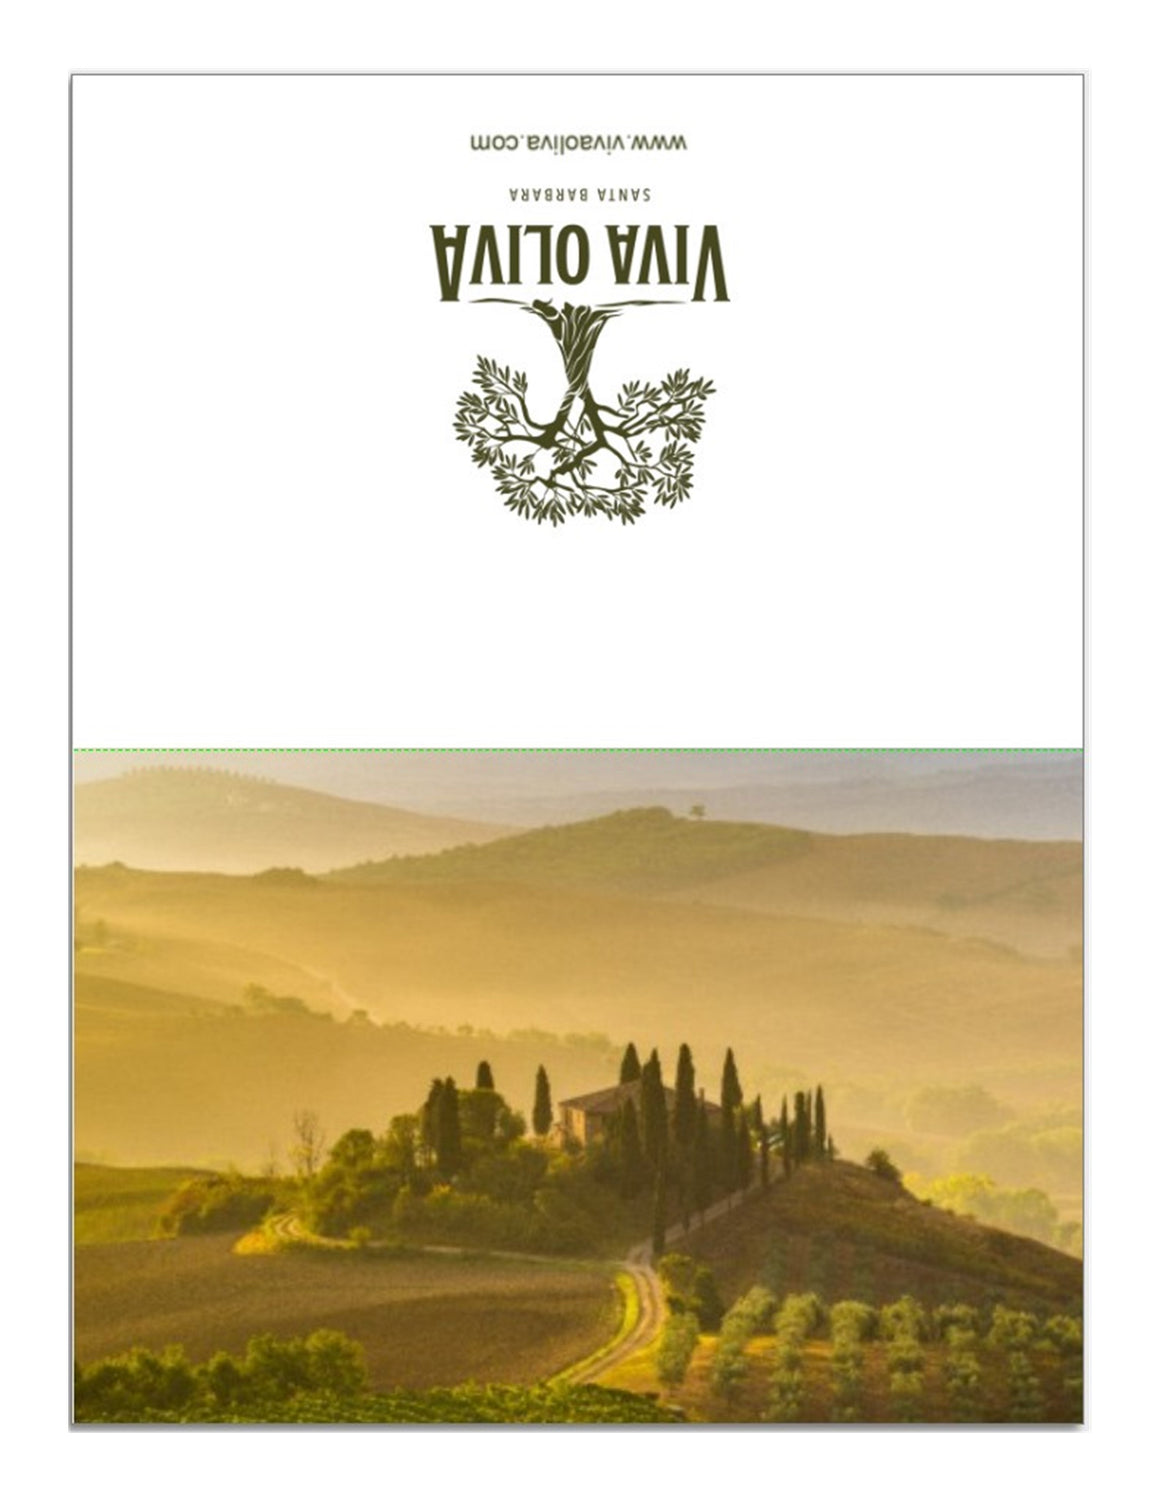 Greeting Card - Tuscan Mist